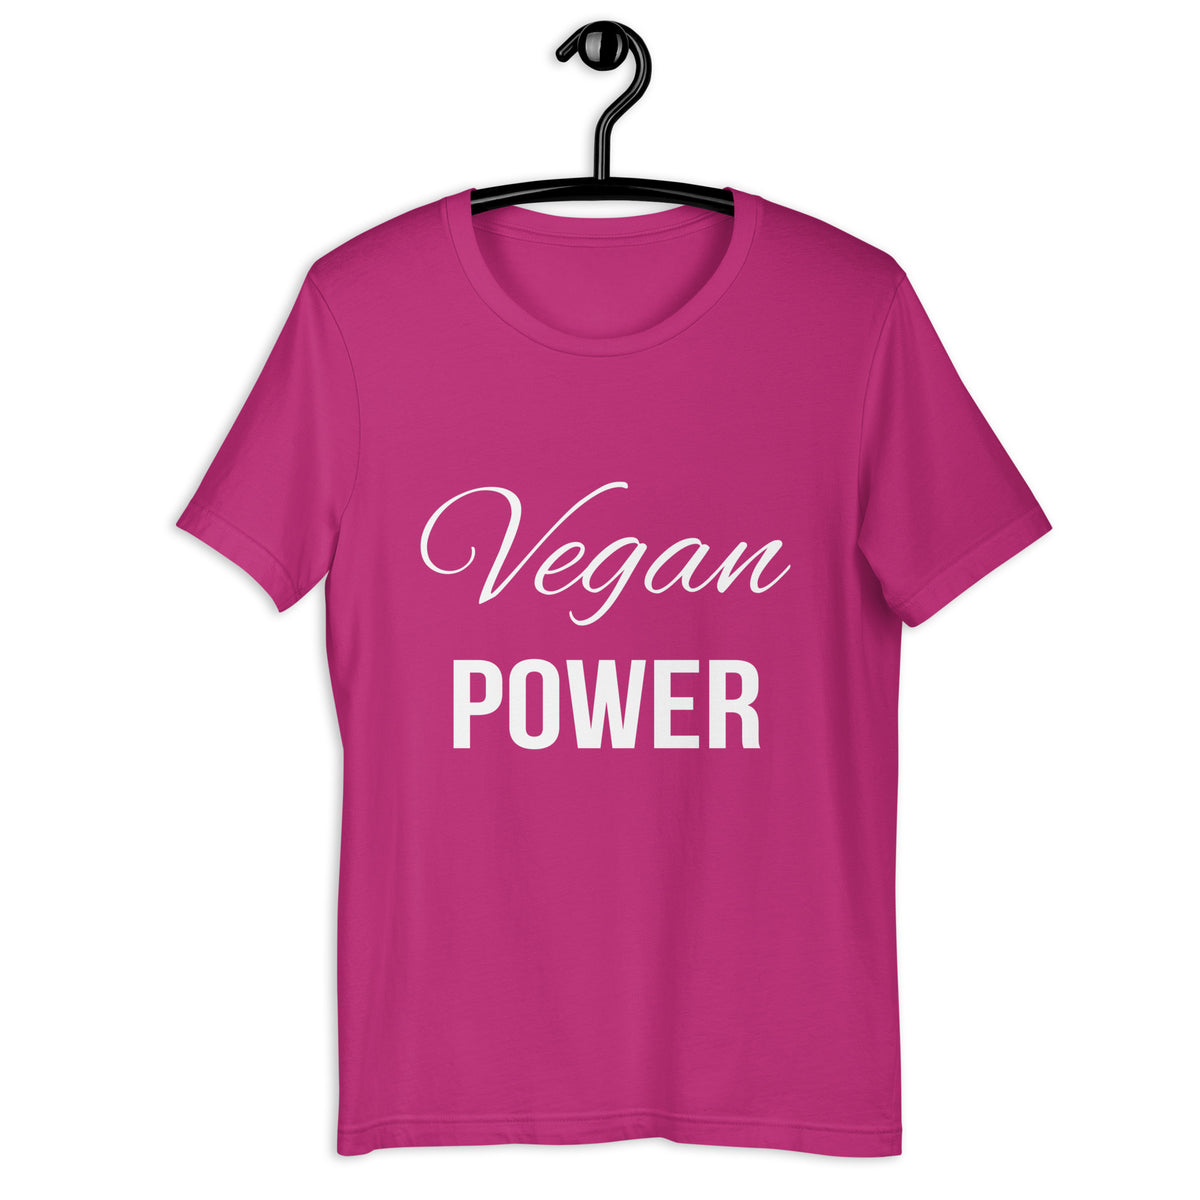 VEGAN POWER Colored t-shirt